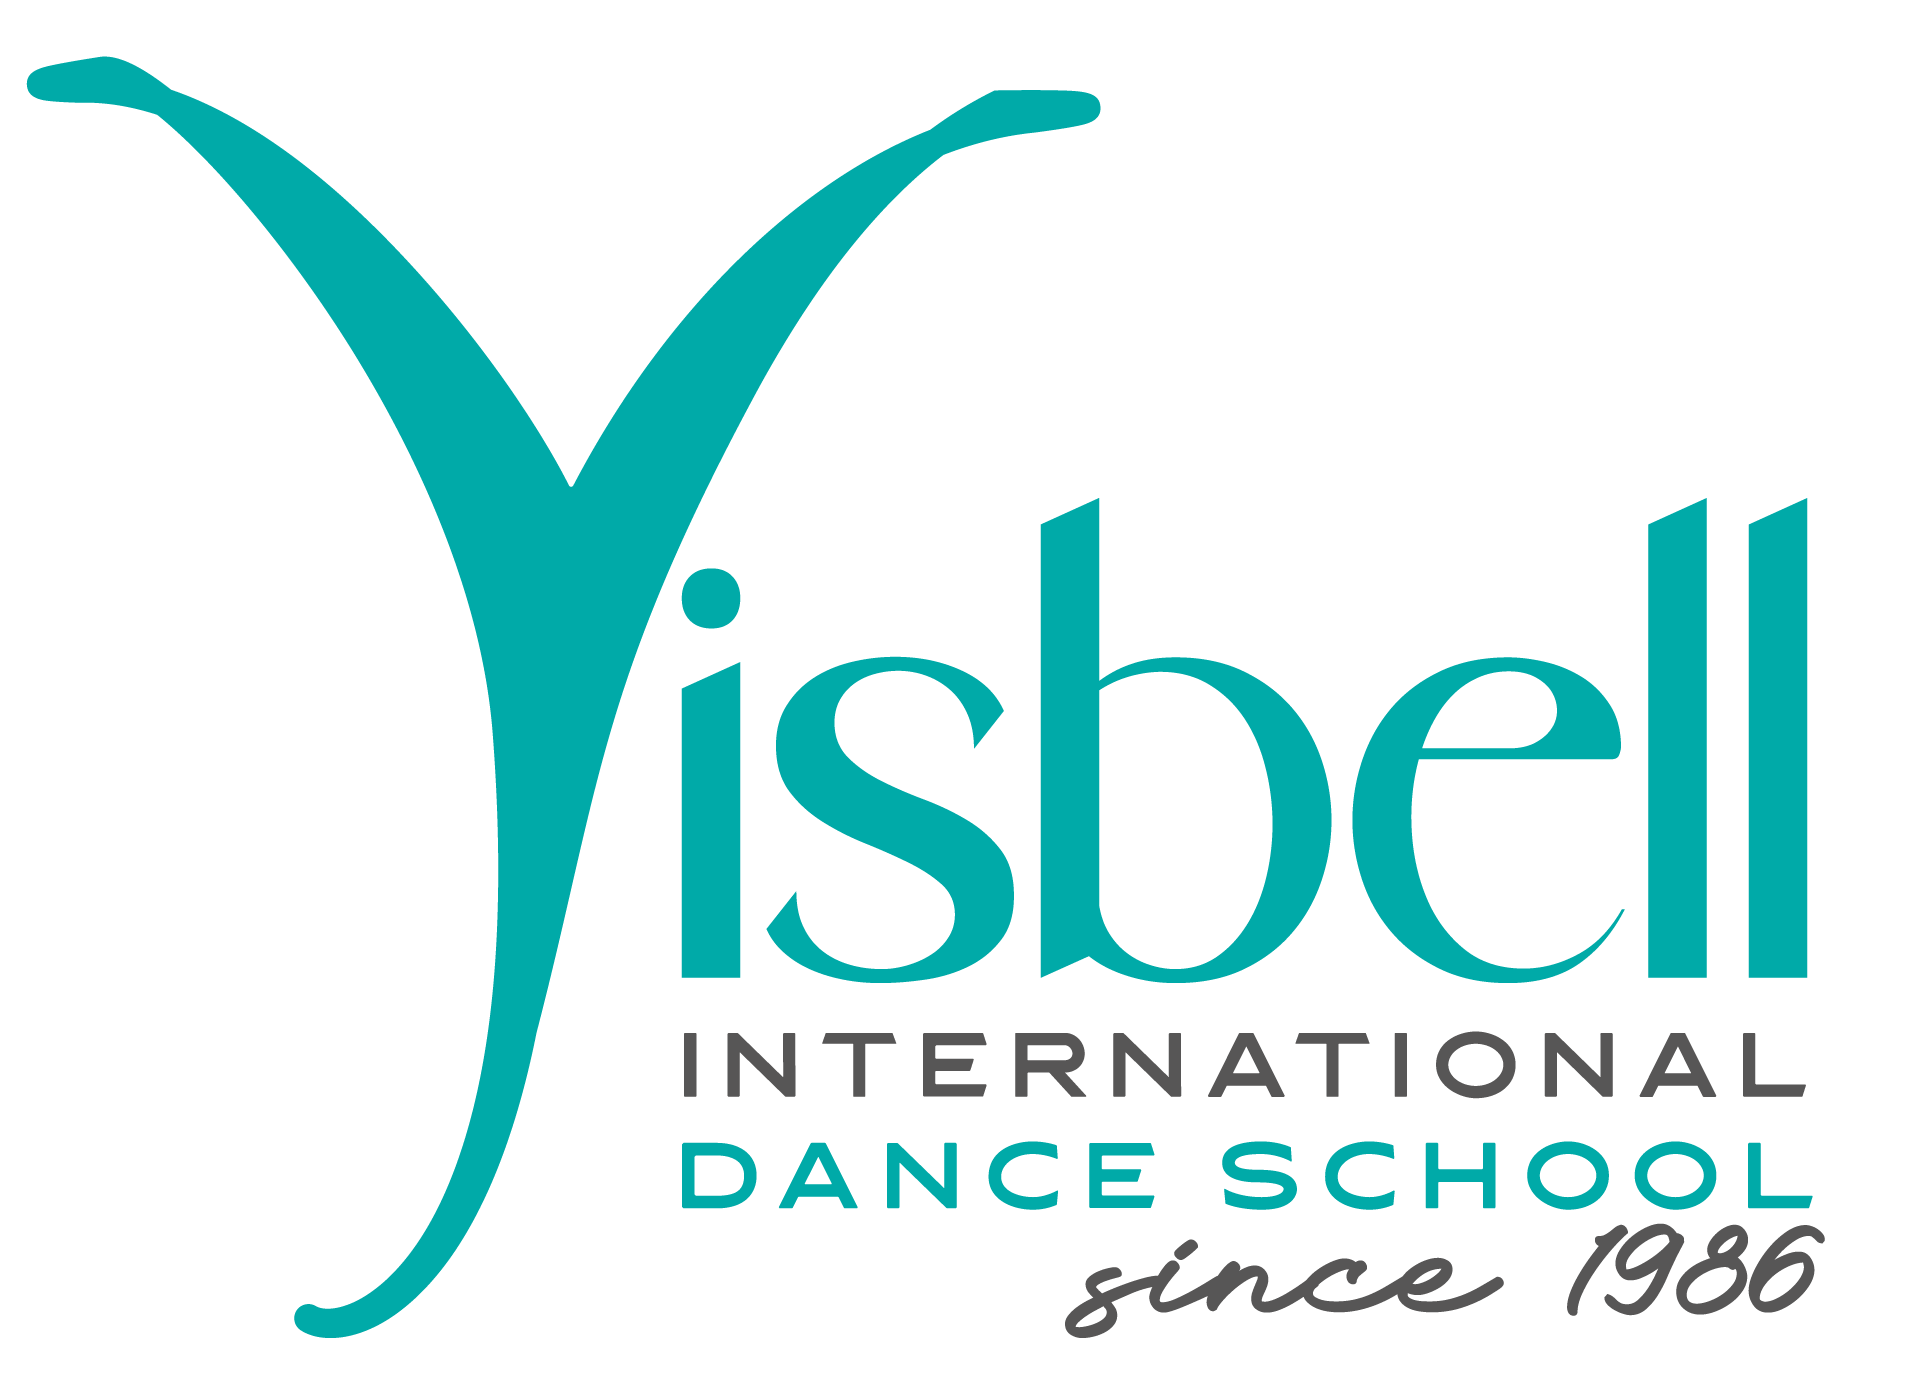 Yisbell Dance